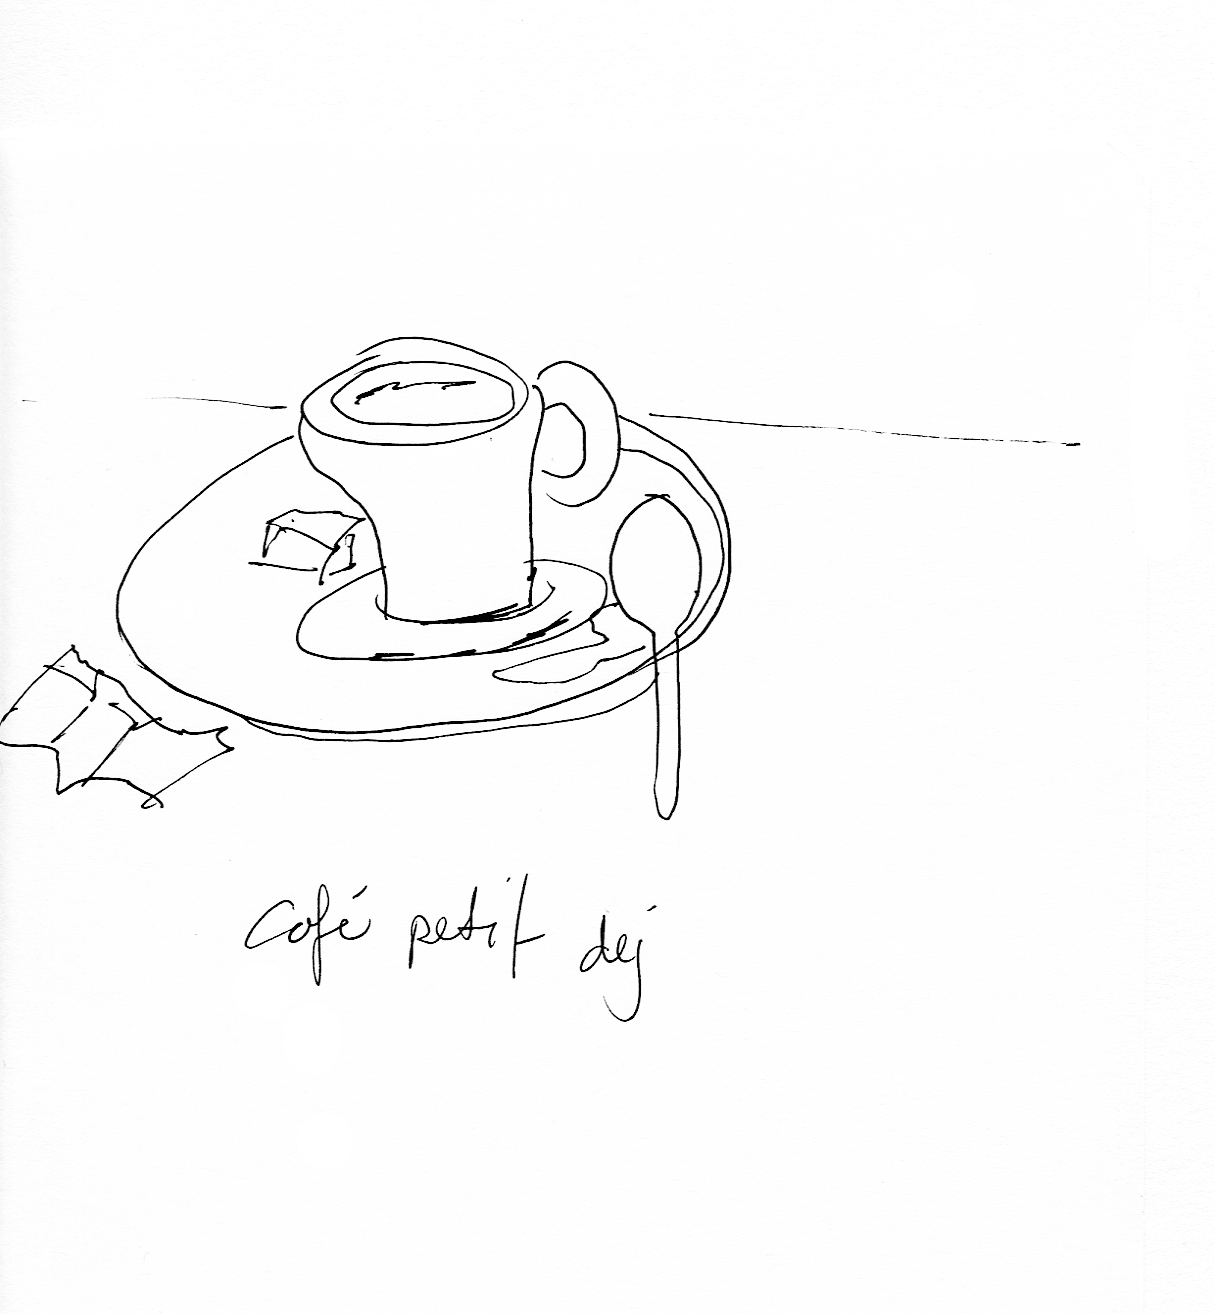 art every day number 54 / drawing / illustration / café petit déj